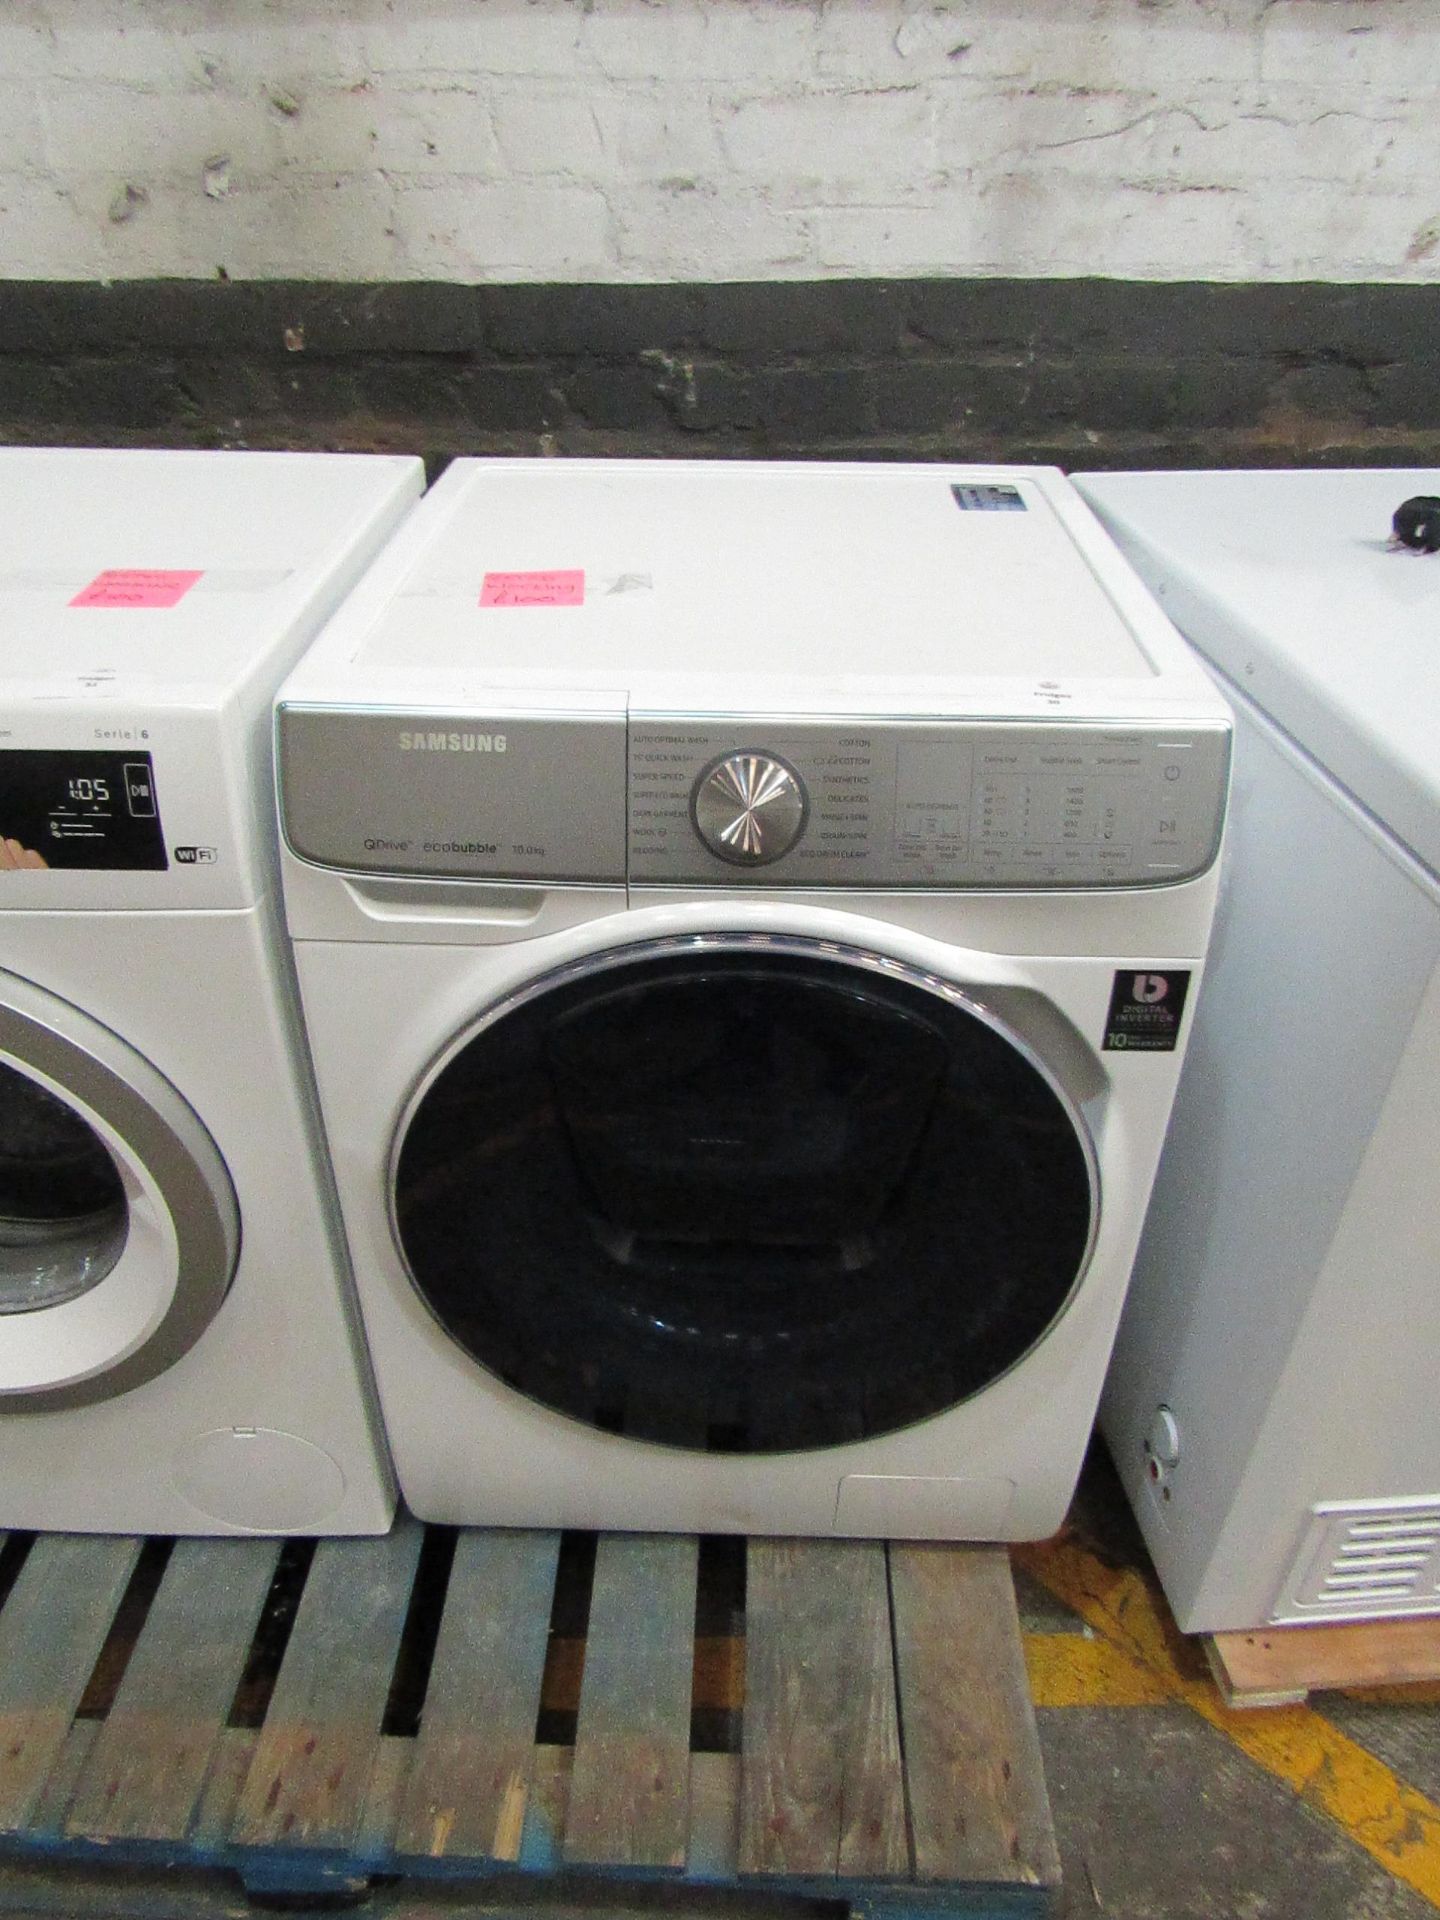 Samsung eco bubble 10kg washing machine, tested working